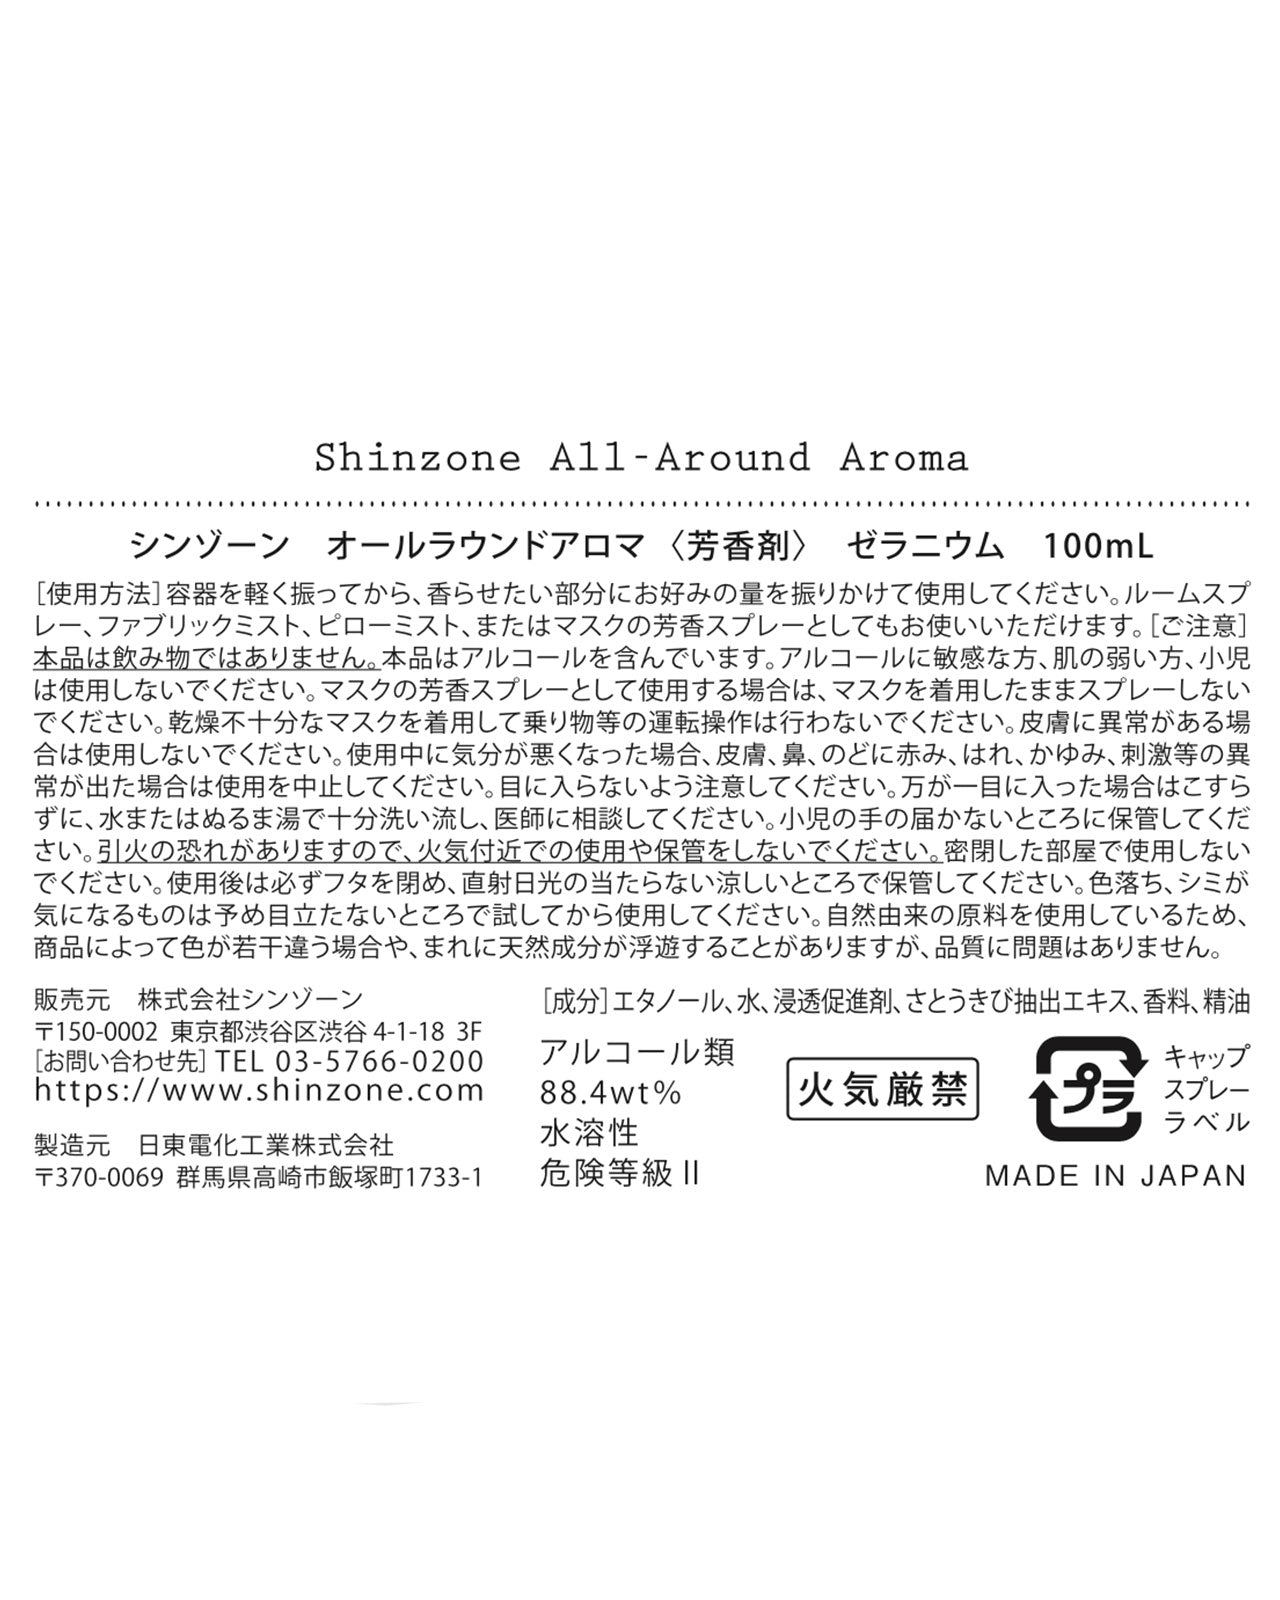 Shinzone All-Around Aroma Geranium